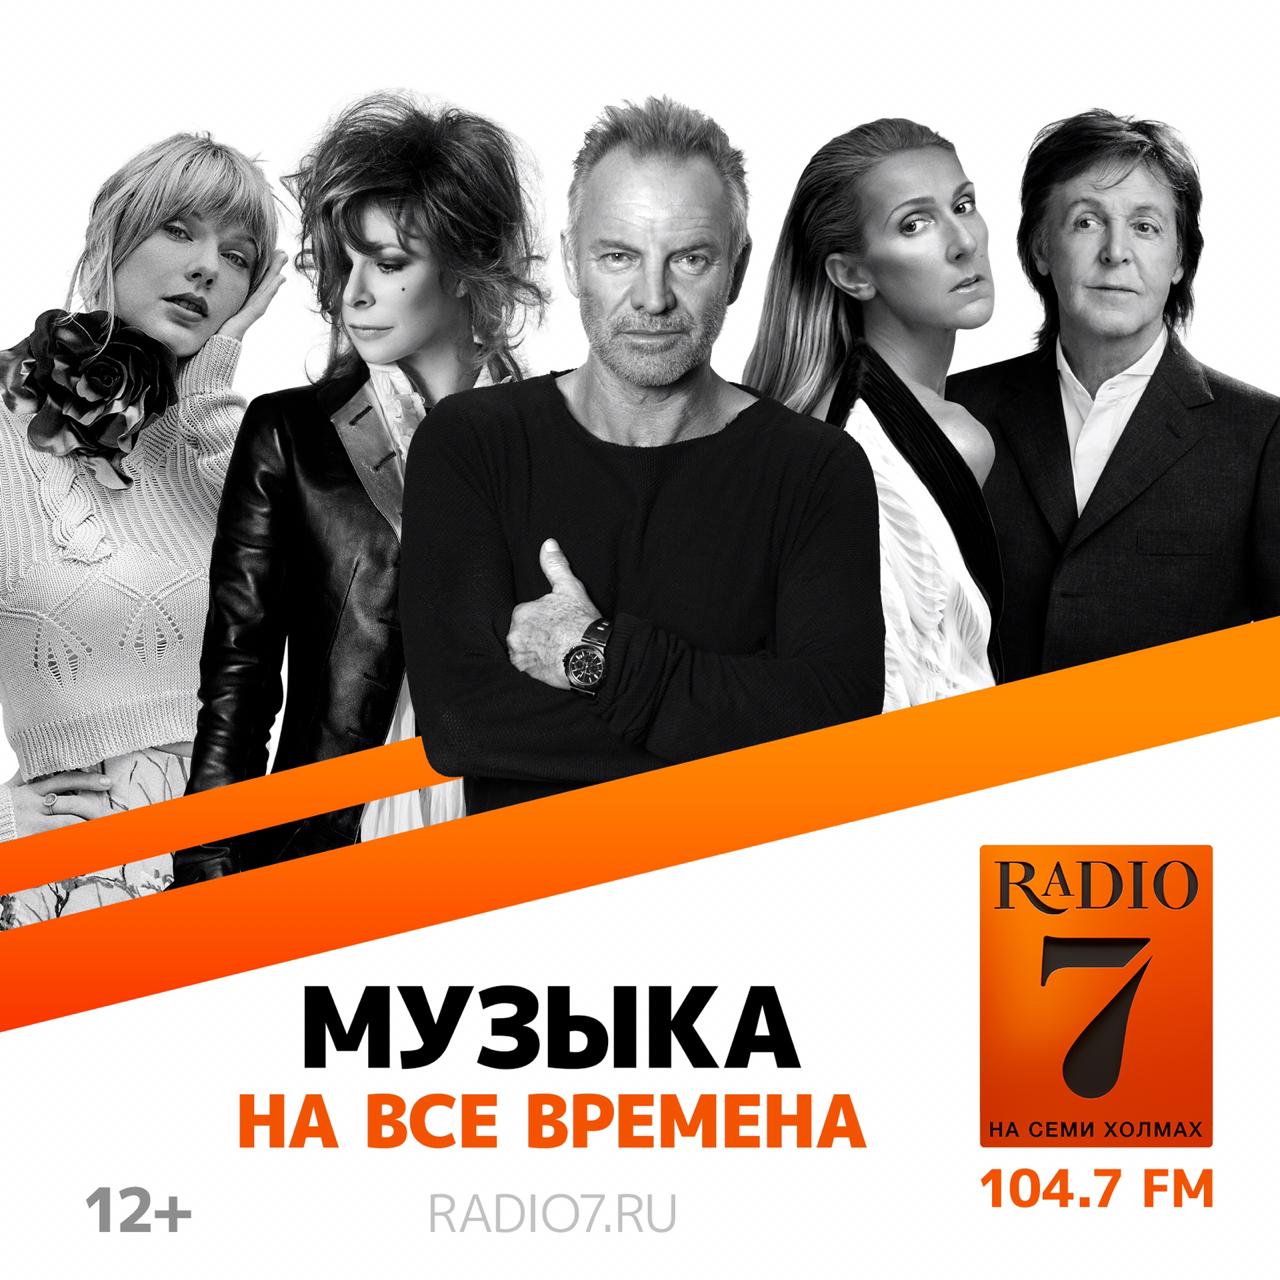 Музыка радио семь на семи холмах. Радио на семи холмах. Радио 7 на 7. Радио 7 на семи холмах Москва. Радио 7 реклама.